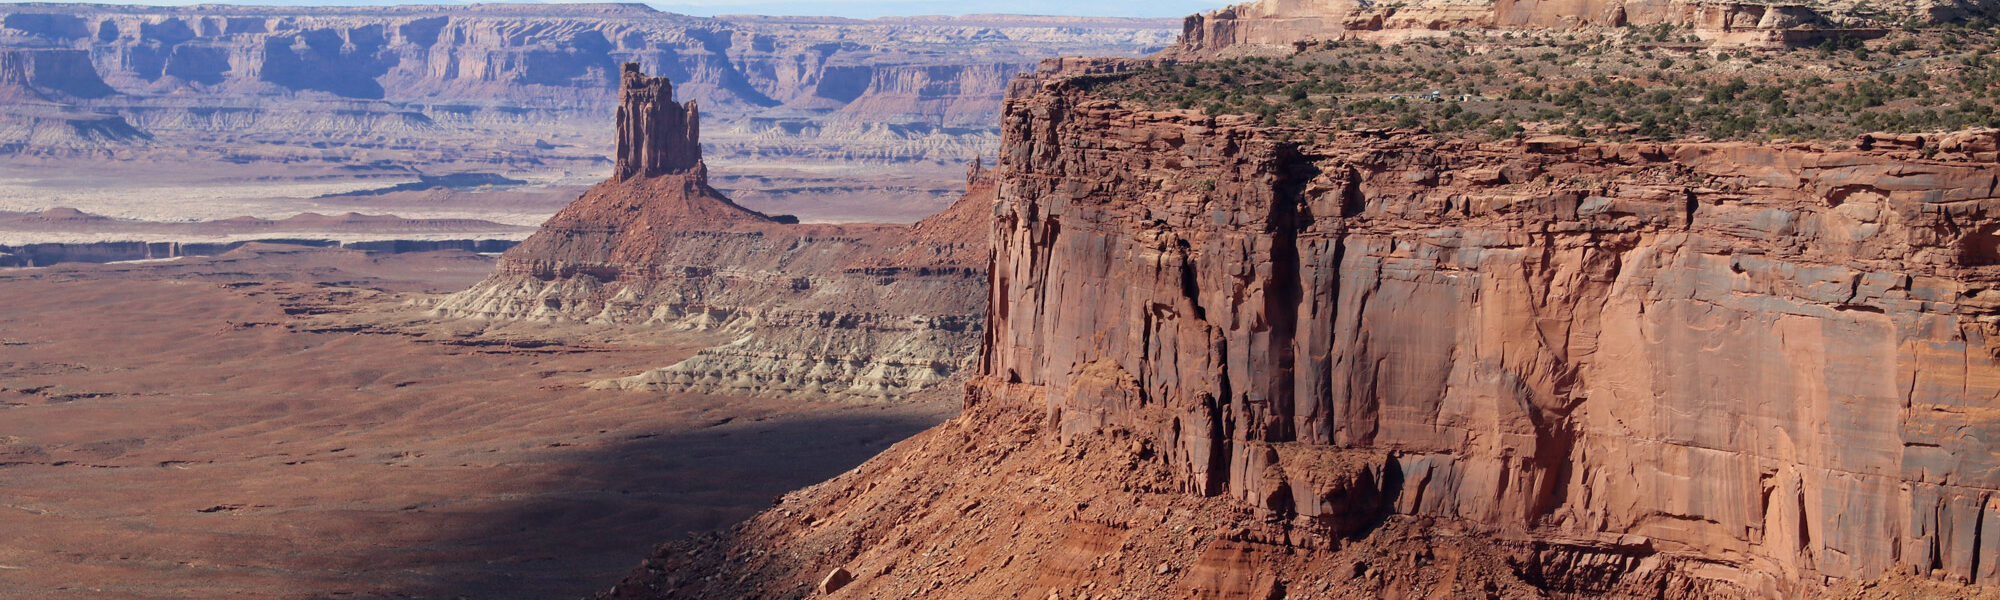 Amerika dag 8 - Canyonlands National Park - Orange Cliffs Overlook